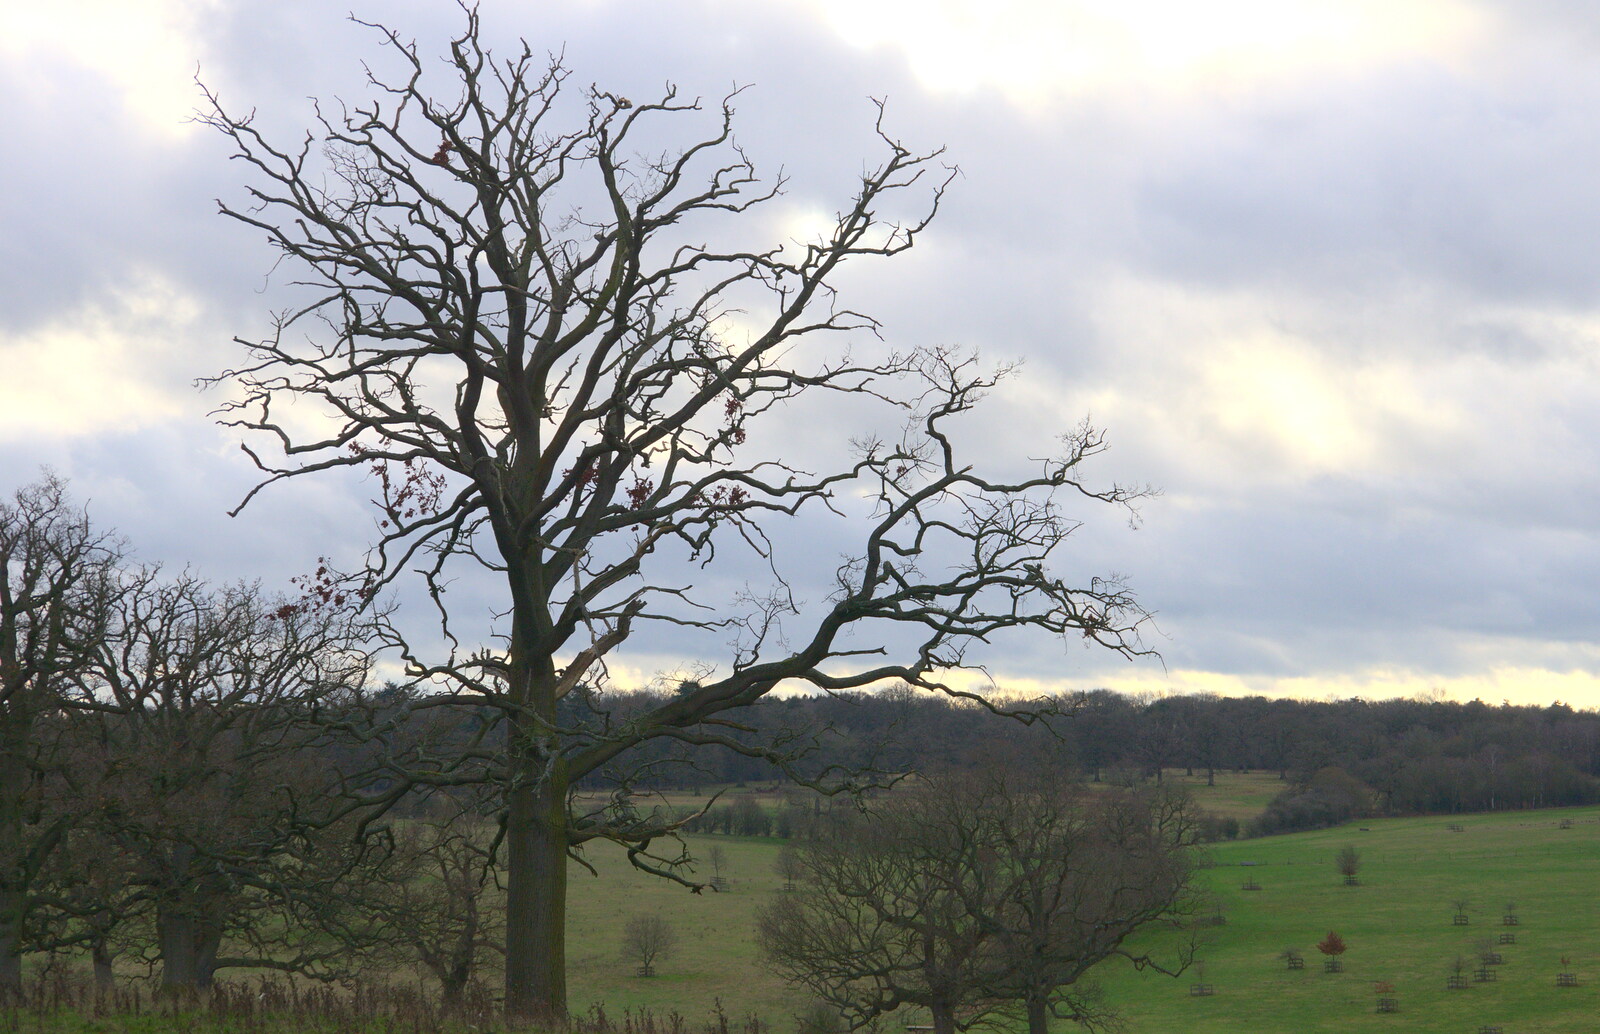 Tree skeleton overlooking the fields from Ickworth House, Horringer, Suffolk - 29th December 2018